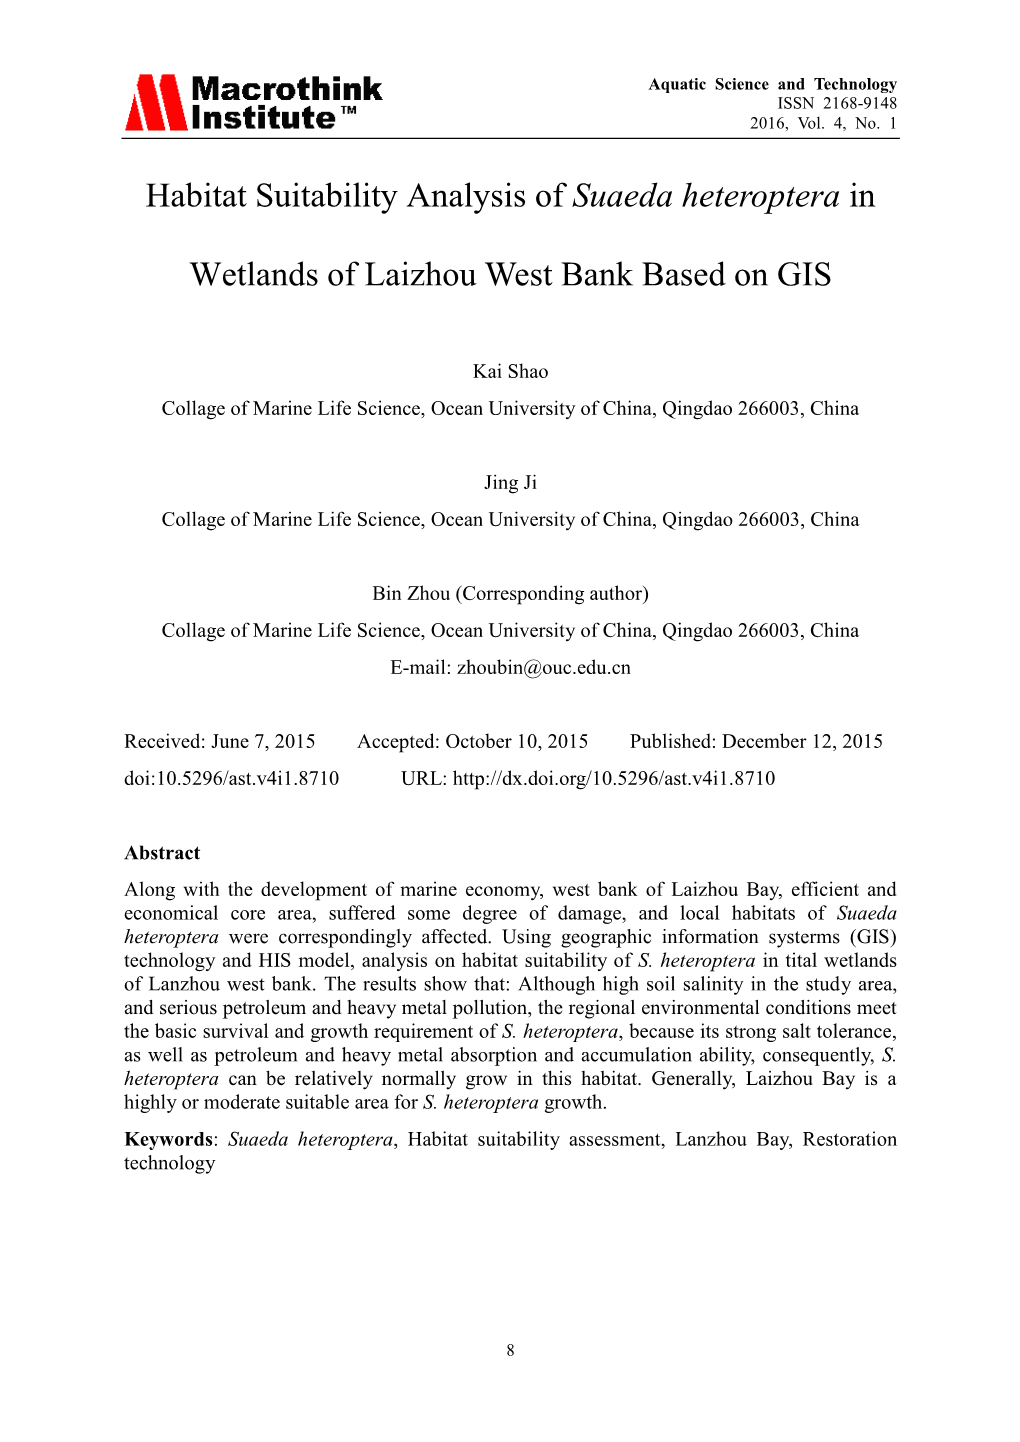 Habitat Suitability Analysis of Suaeda Heteroptera in Wetlands of Laizhou West Bank Based On